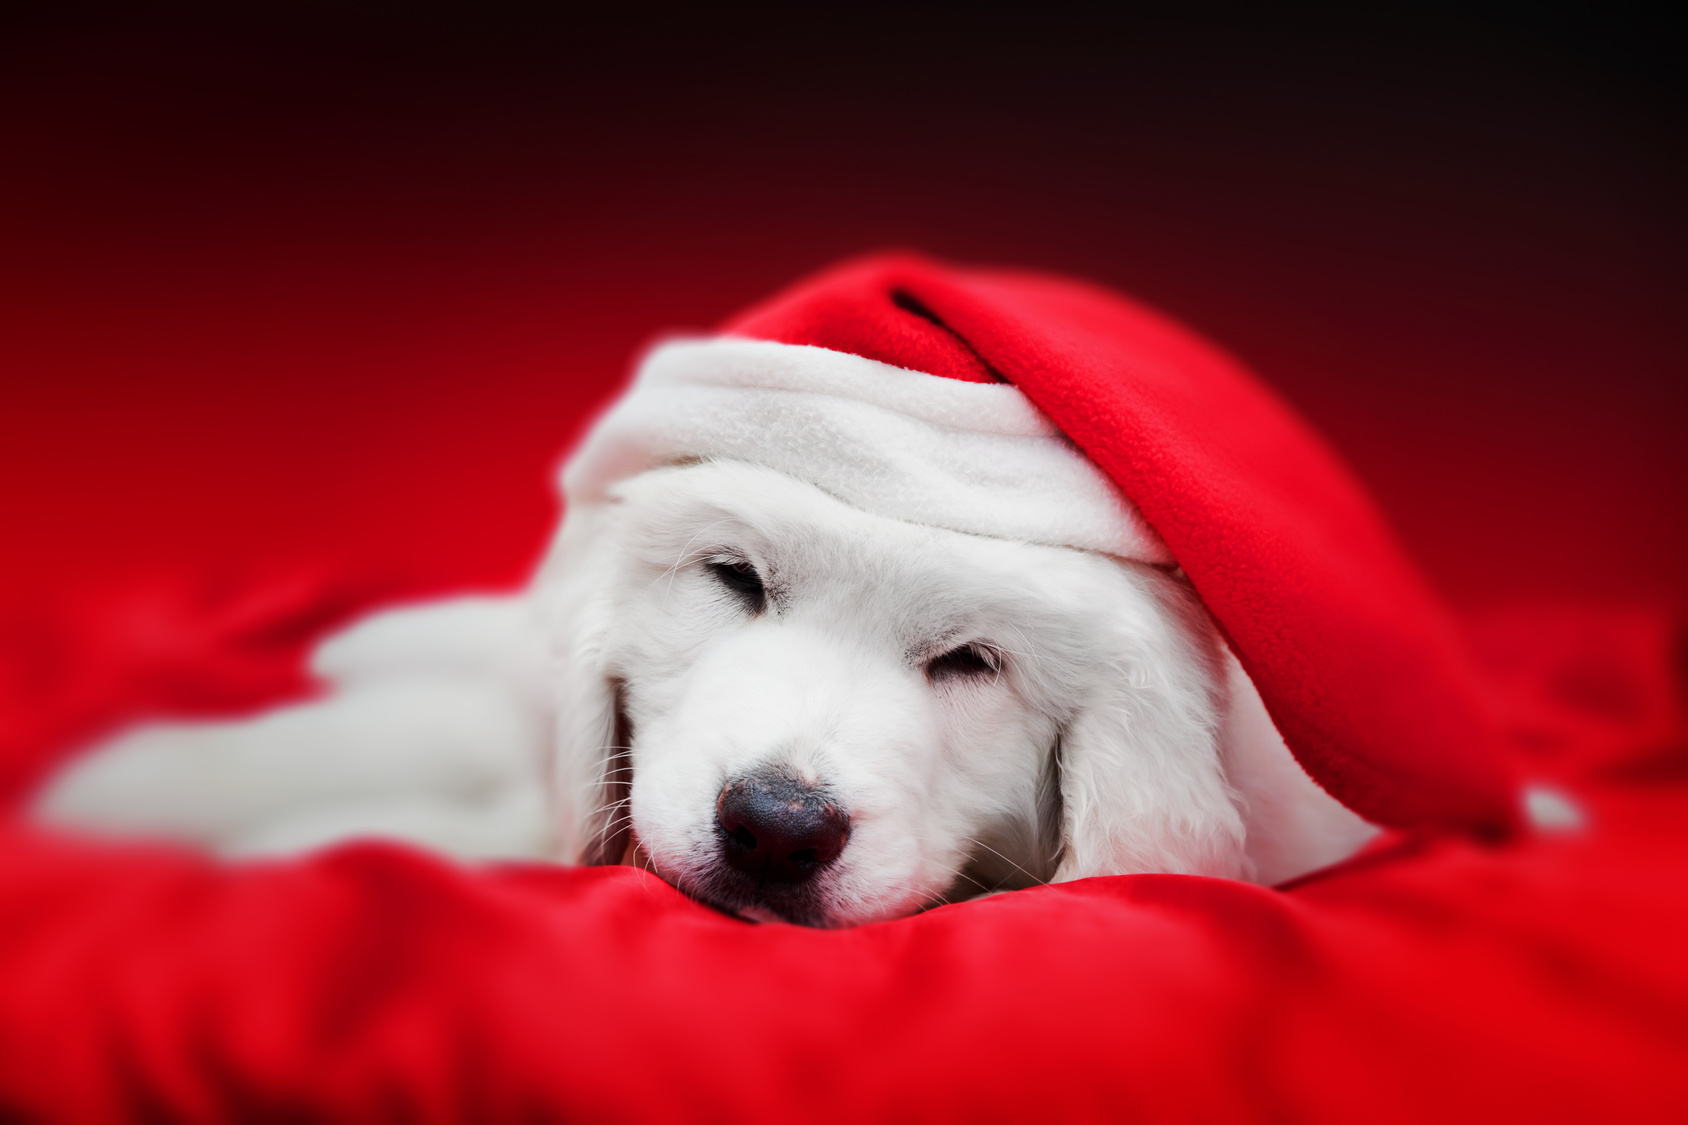 Cute white puppy dog in Chrstimas hat sleeping in red satin